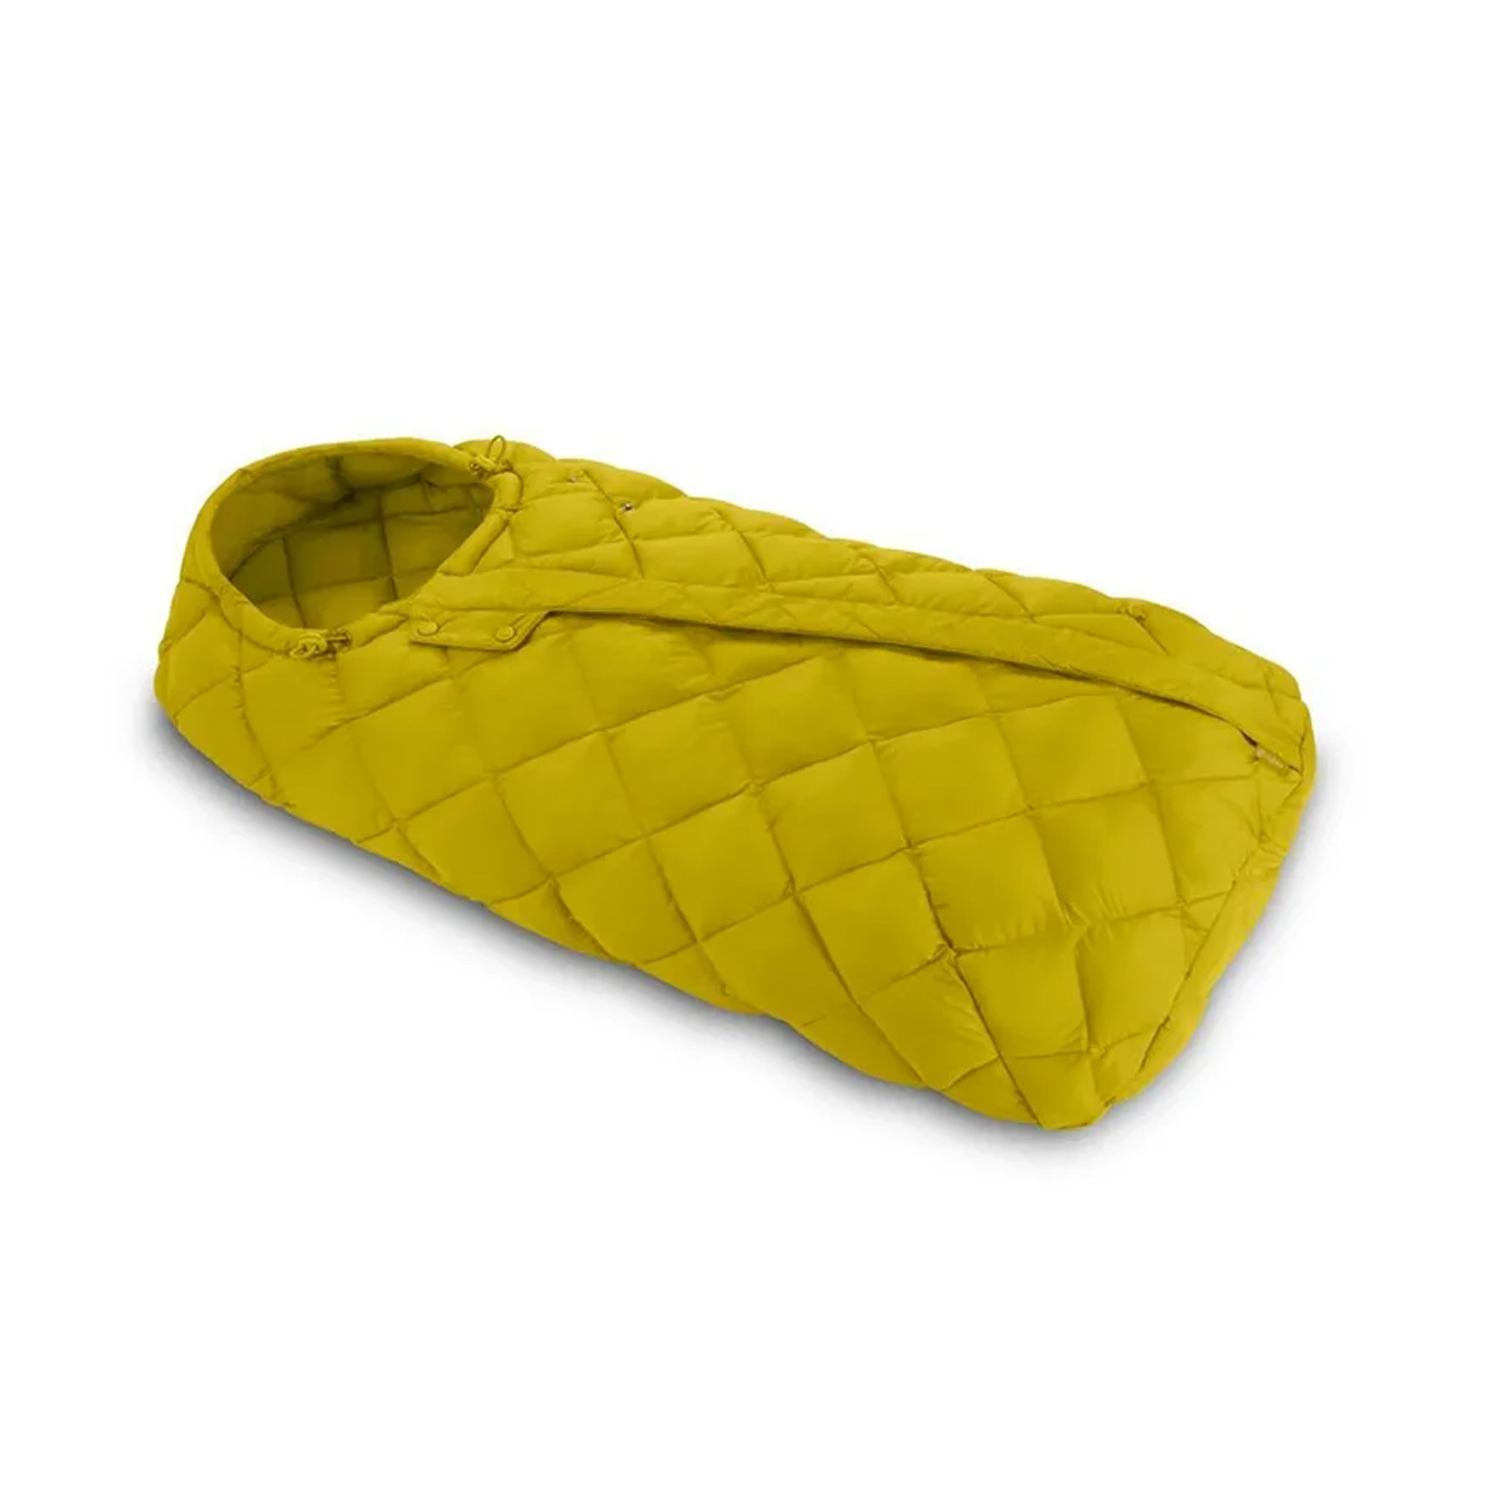 Теплый конверт для коляски Snøgga Mustard Yellow CYBEX, цвет нет цвета - фото 3